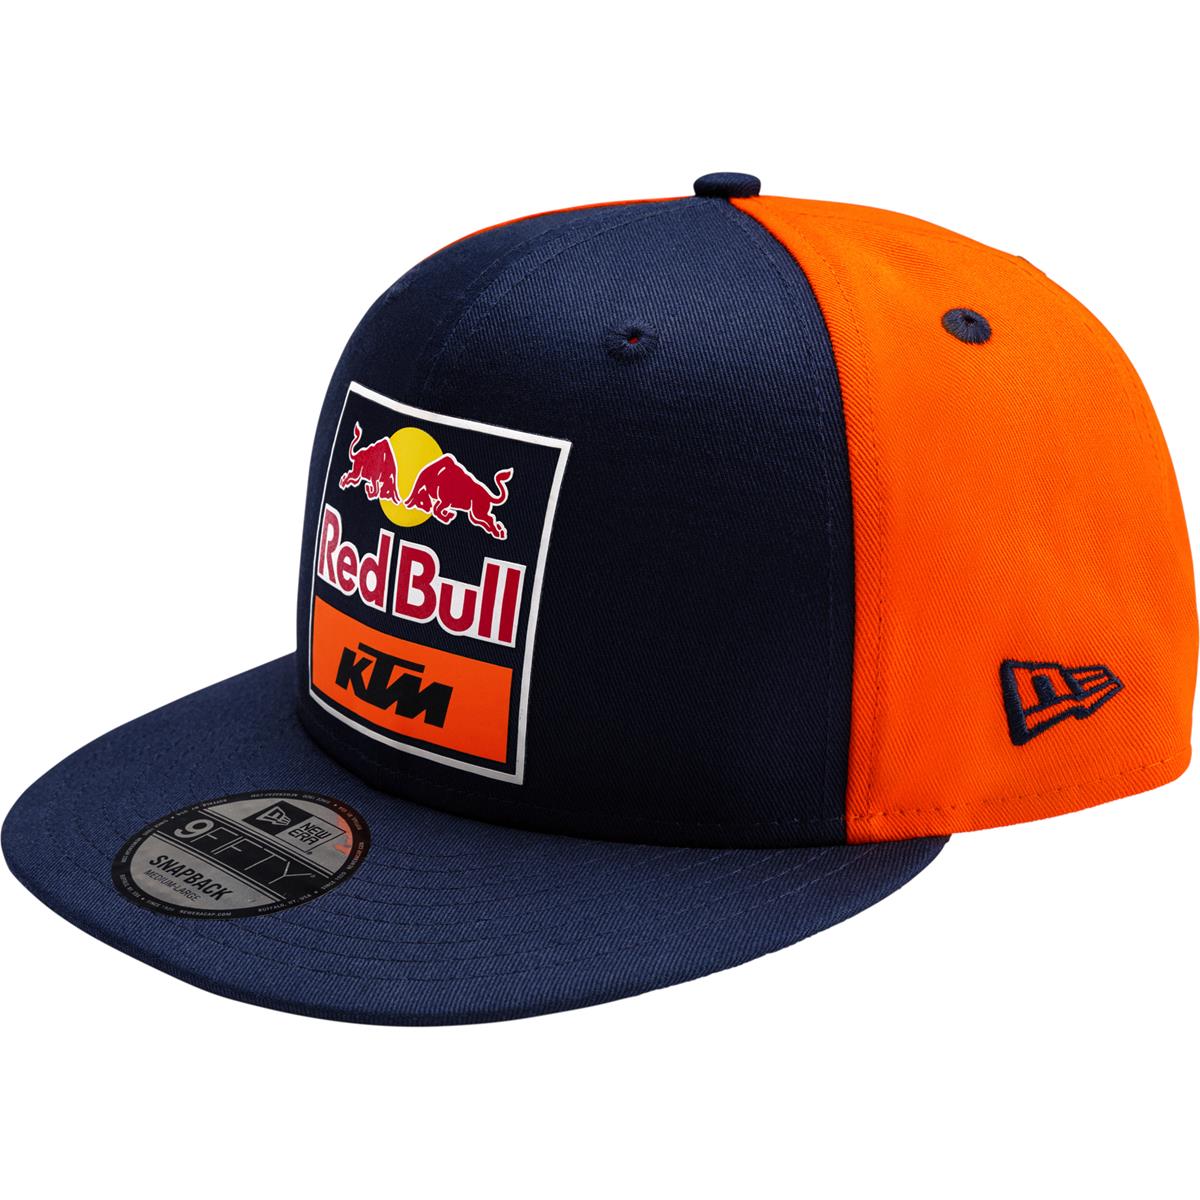 Red Bull Snapback Cappellino KTM Official Teamline Replica - lat - Navy/Arancione